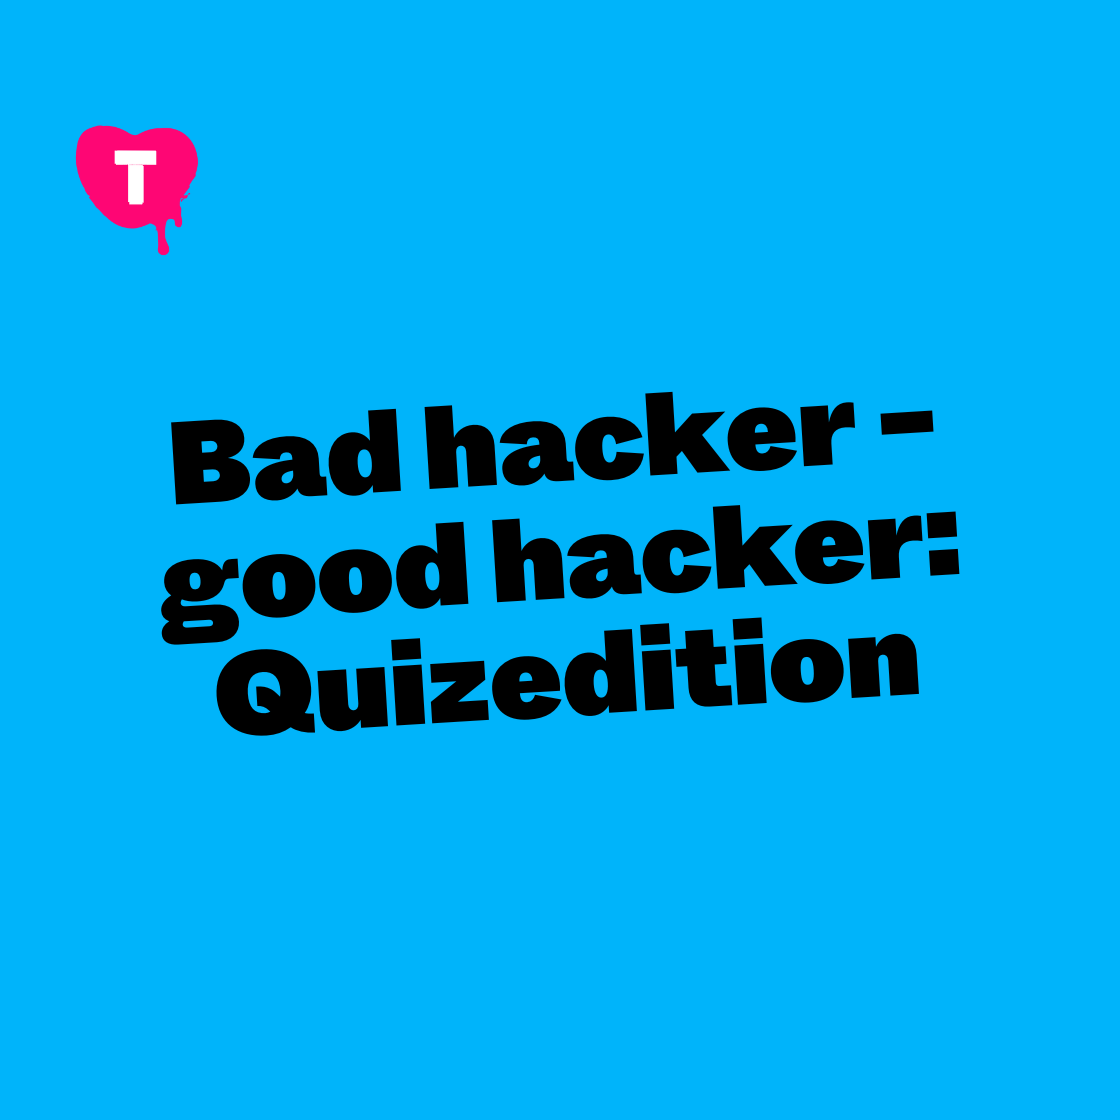 Bad hacker - good hacker